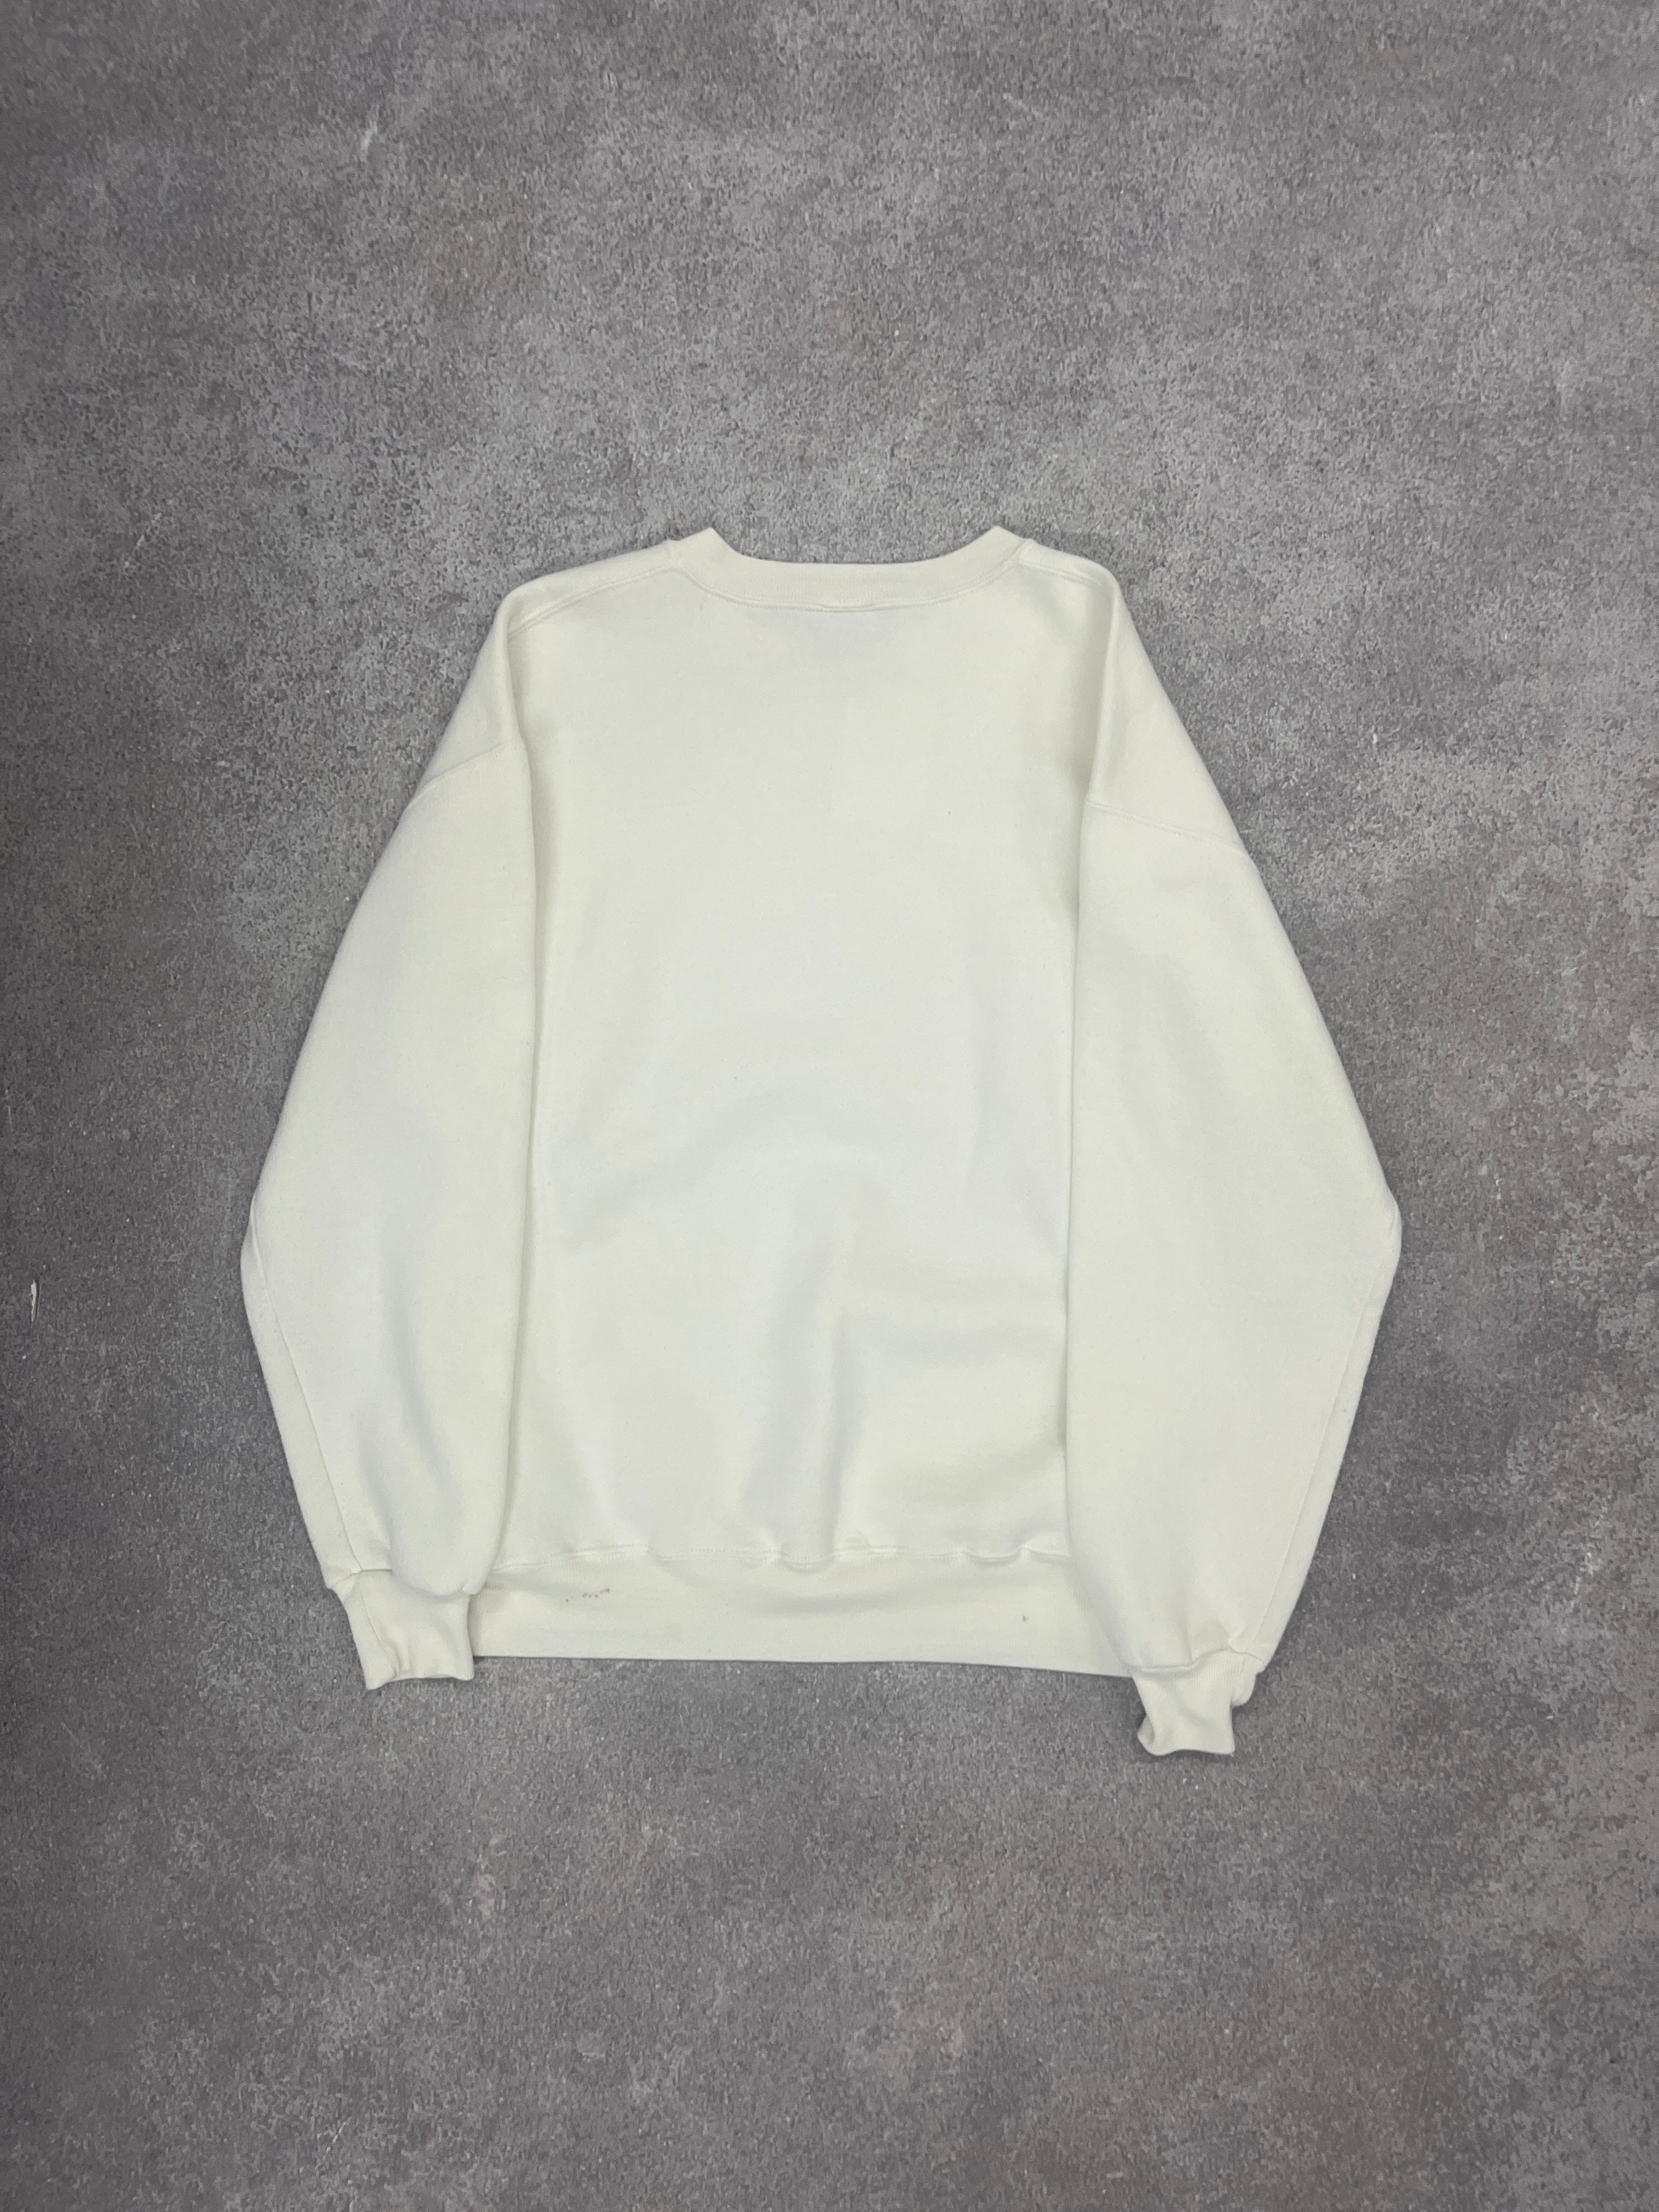 Vintage Russell Blank Sweater White // Medium - RHAGHOUSE VINTAGE